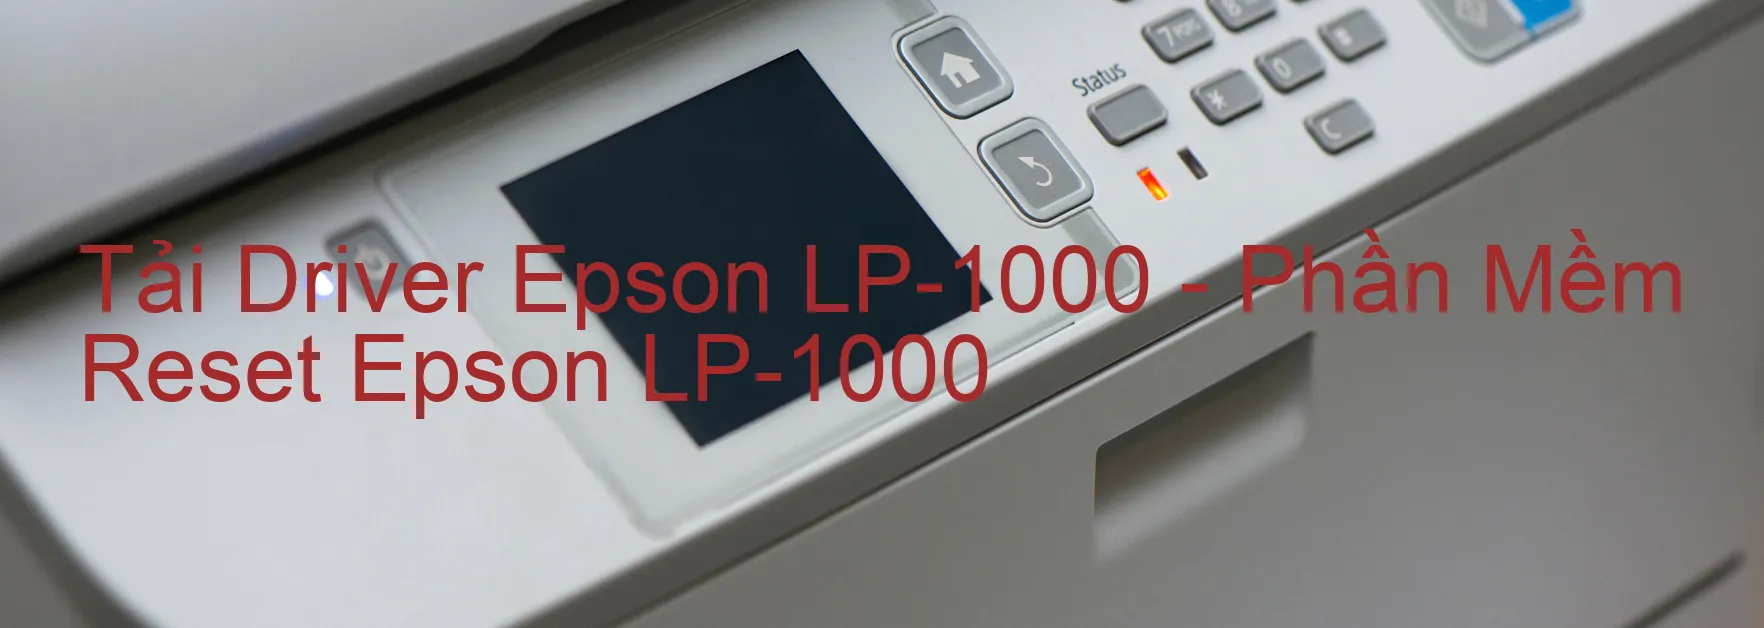 Driver Epson LP-1000, Phần Mềm Reset Epson LP-1000